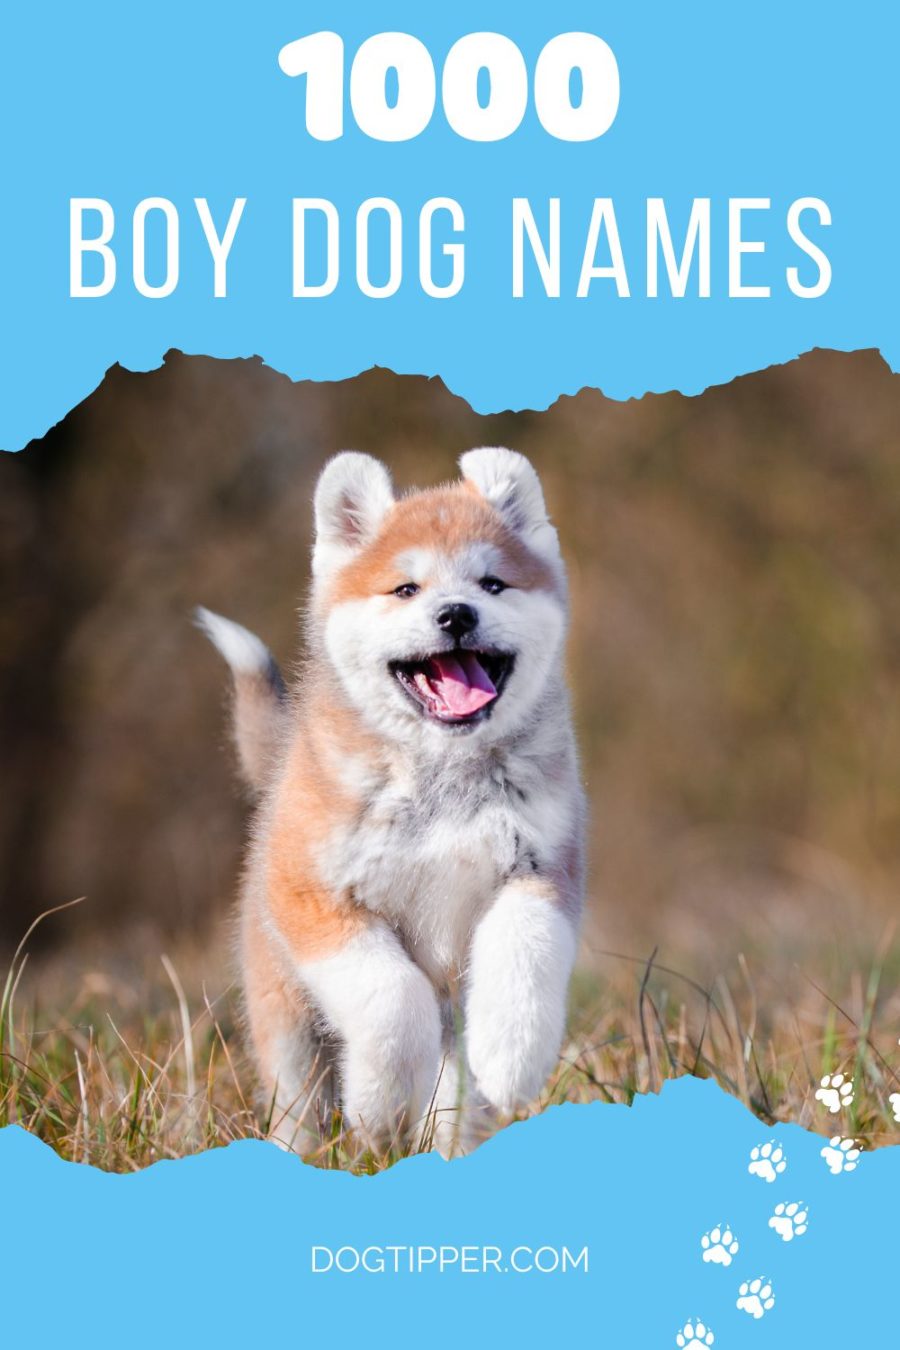 1,000 Boy Dog Names for Your Good Boy